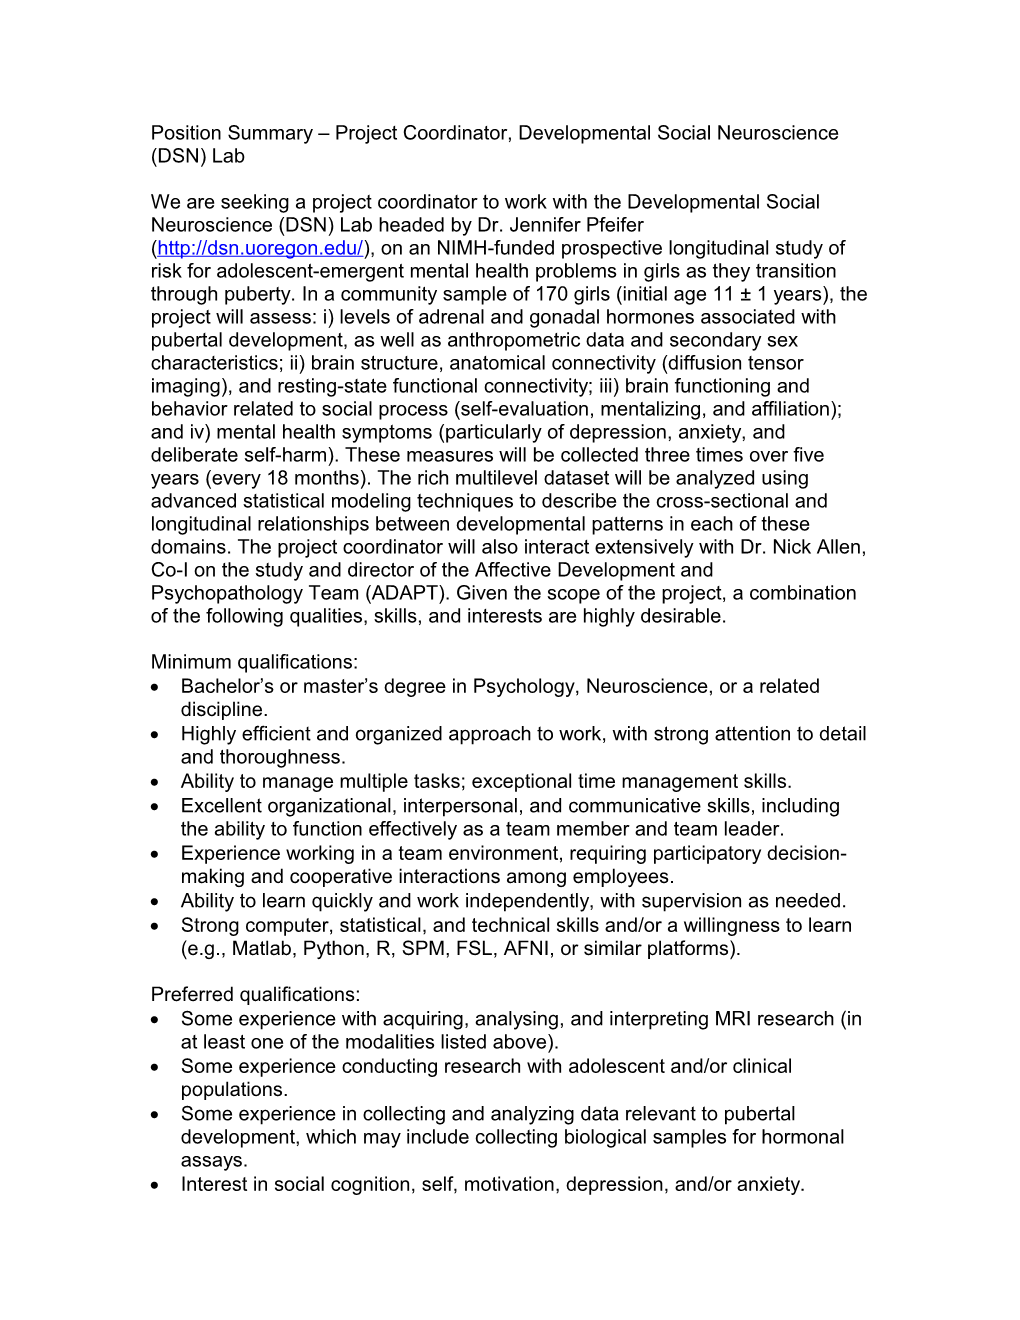 Position Summary Project Coordinator, Developmental Social Neuroscience (DSN) Lab